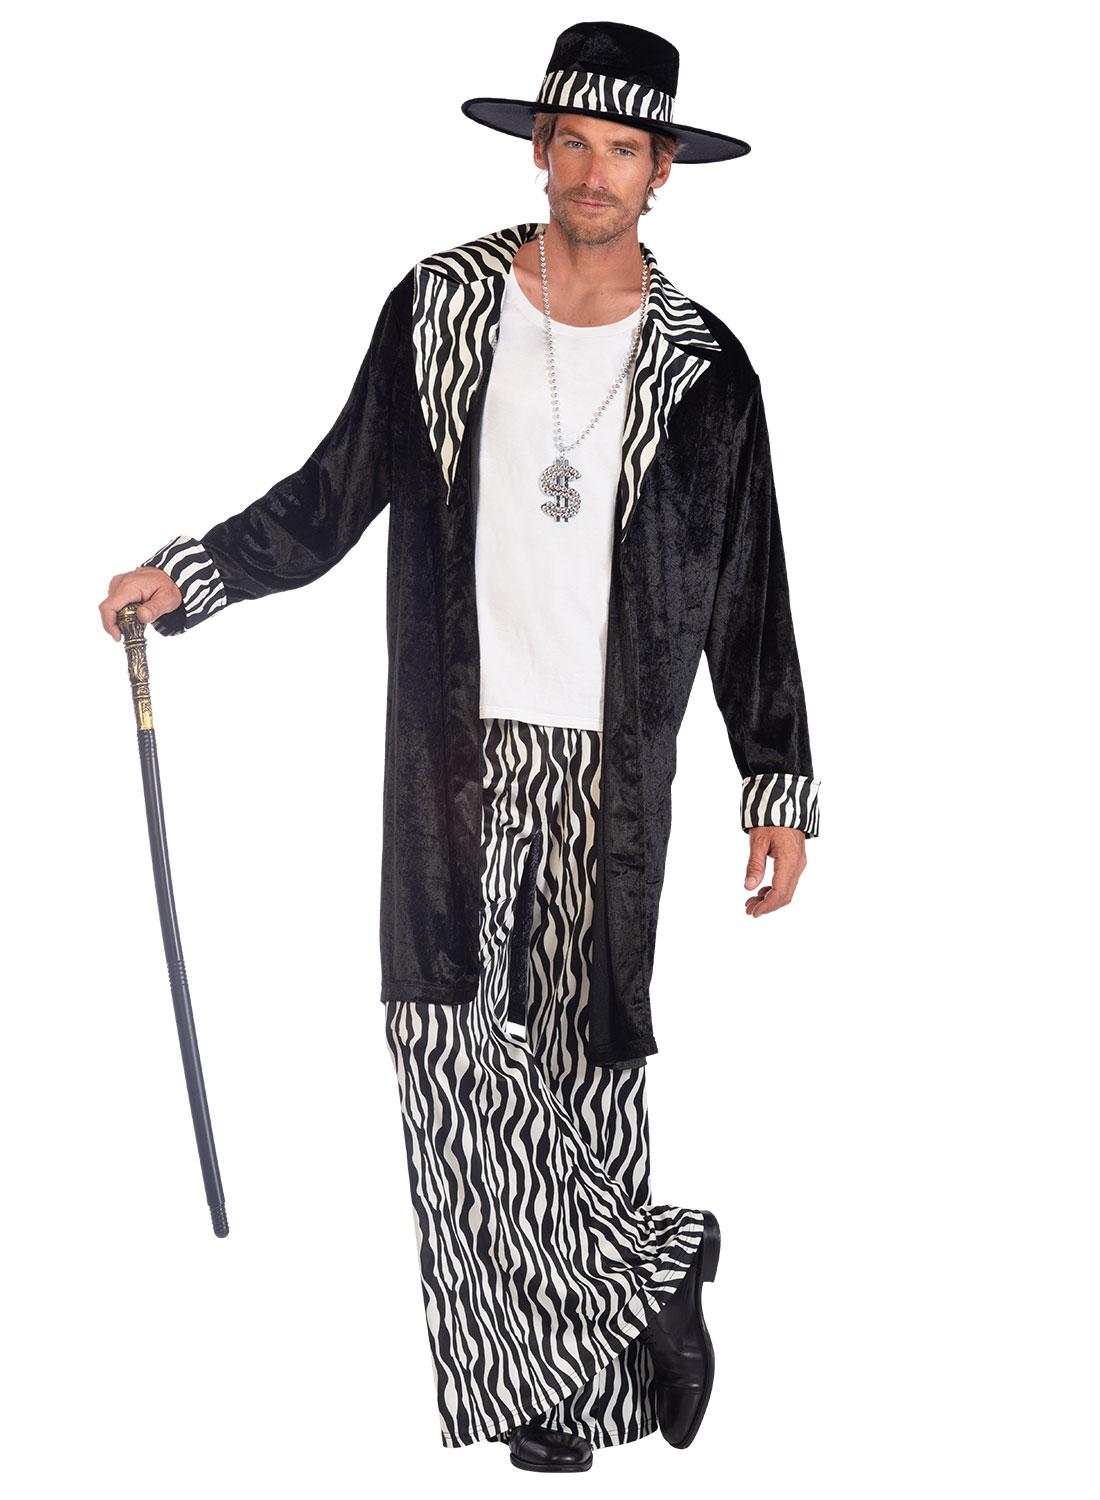 Fly Guy Pimp Costume Zebra Print